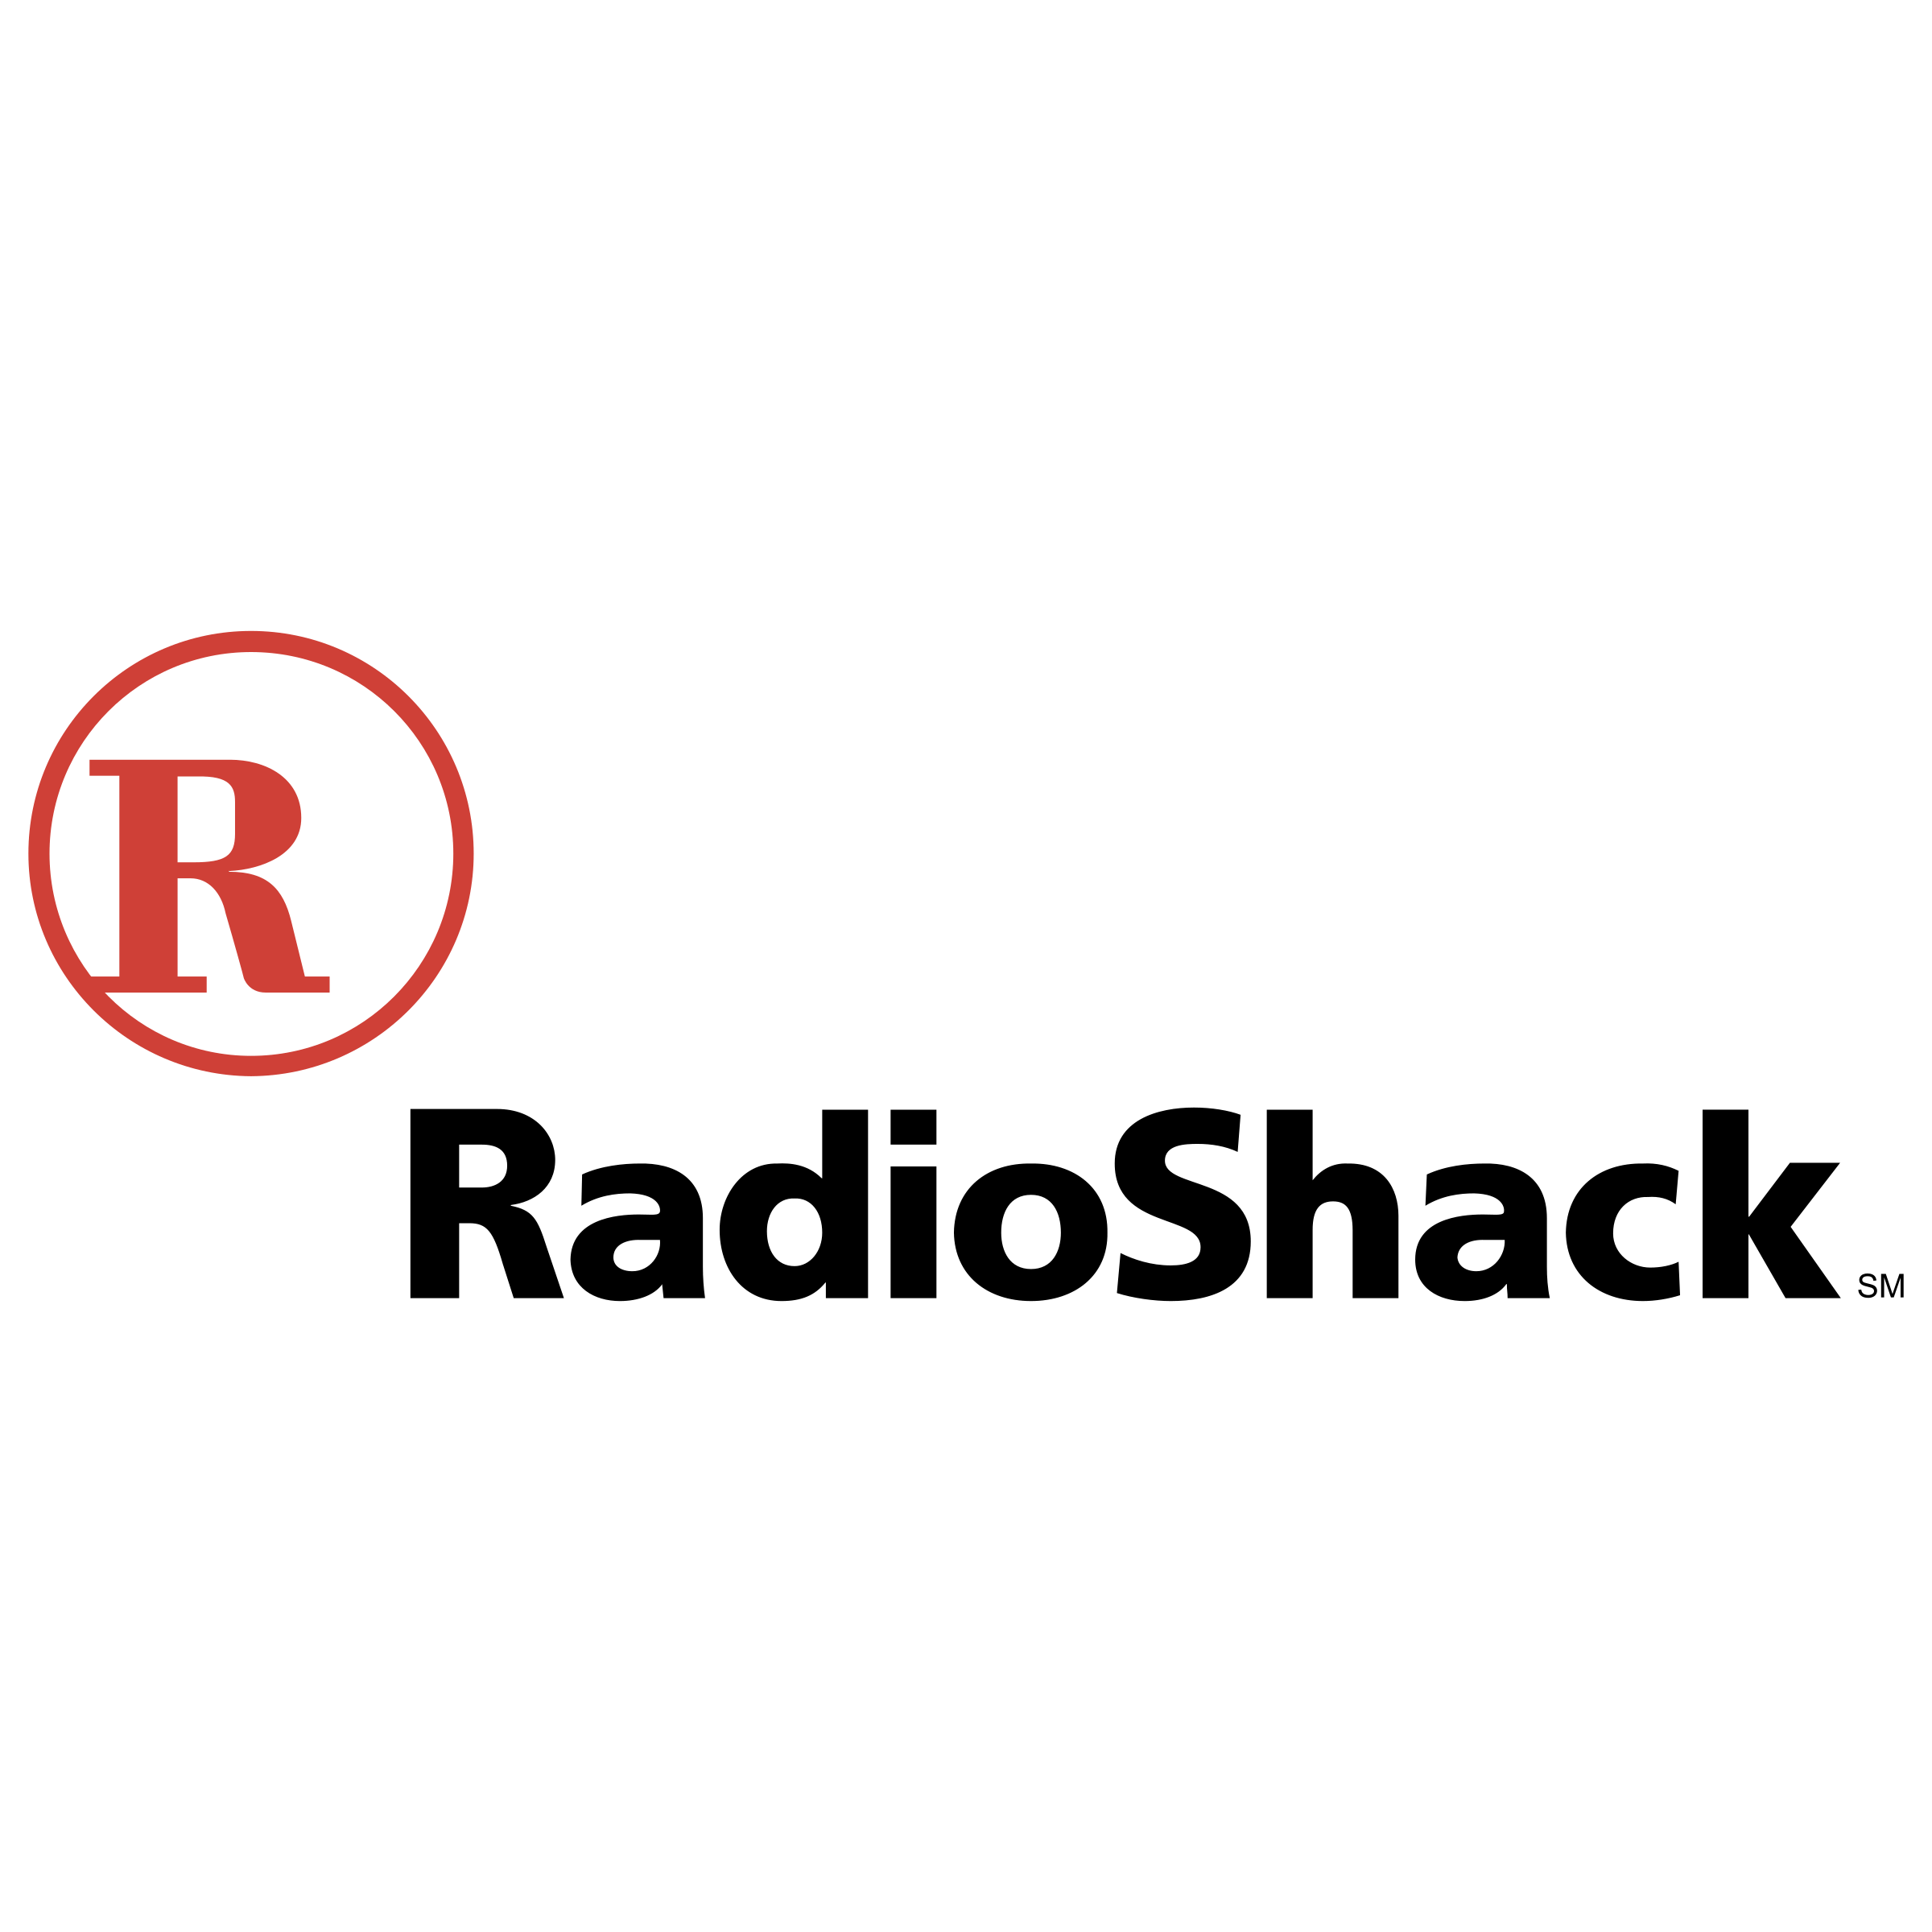 Radioshack Logo - Radio Shack Logo PNG Transparent & SVG Vector